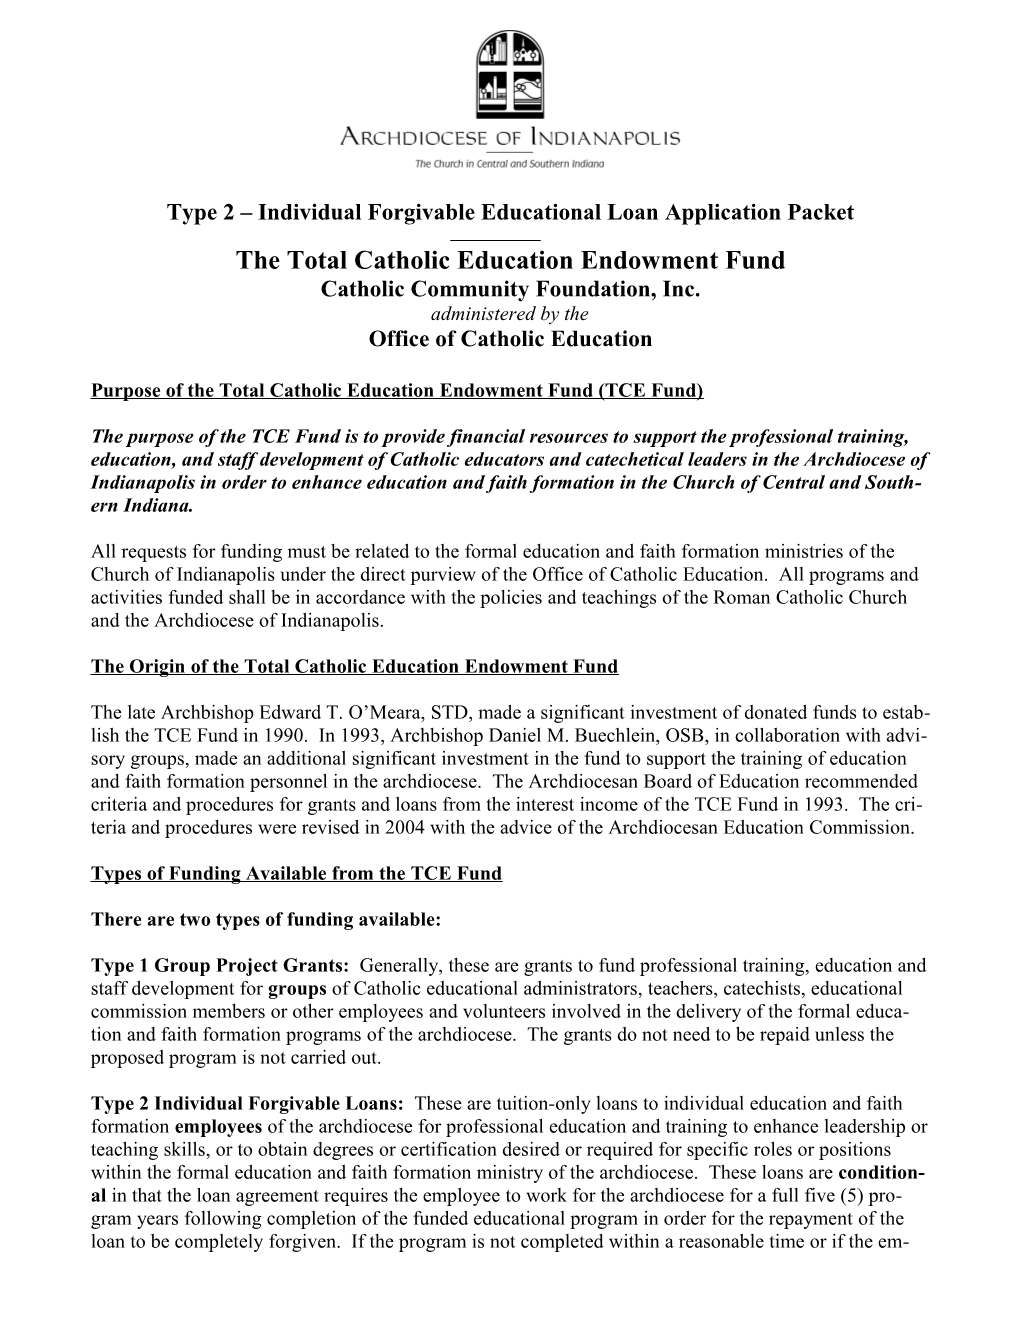 The Total Catholic Education Endowment Fund